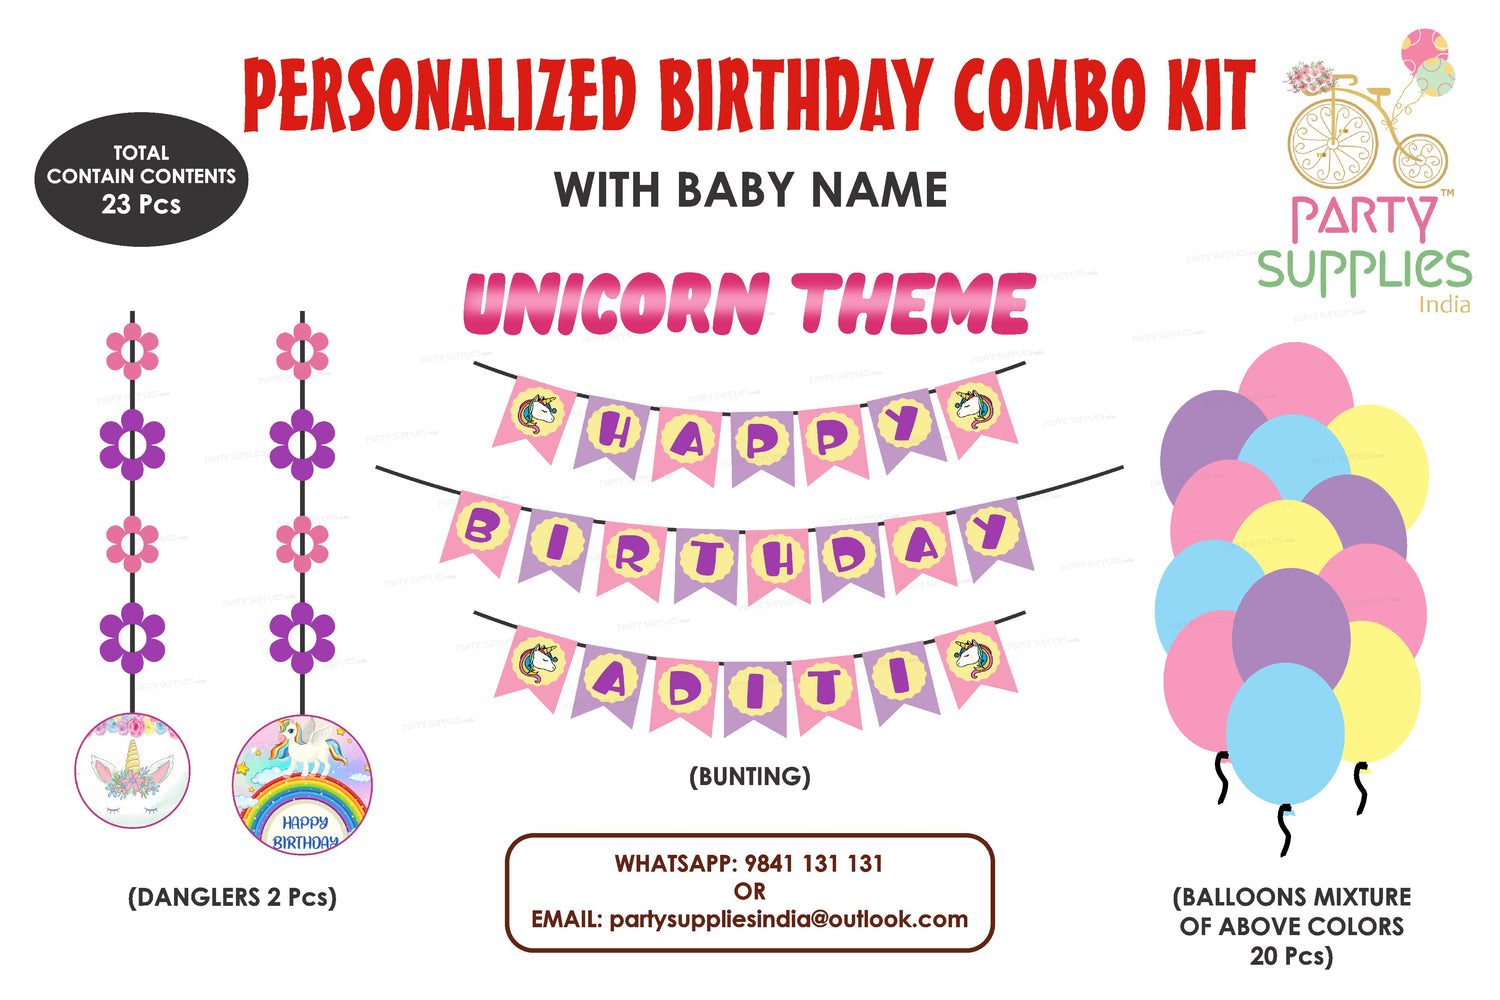 PSI Unicorn Theme Basic Kit